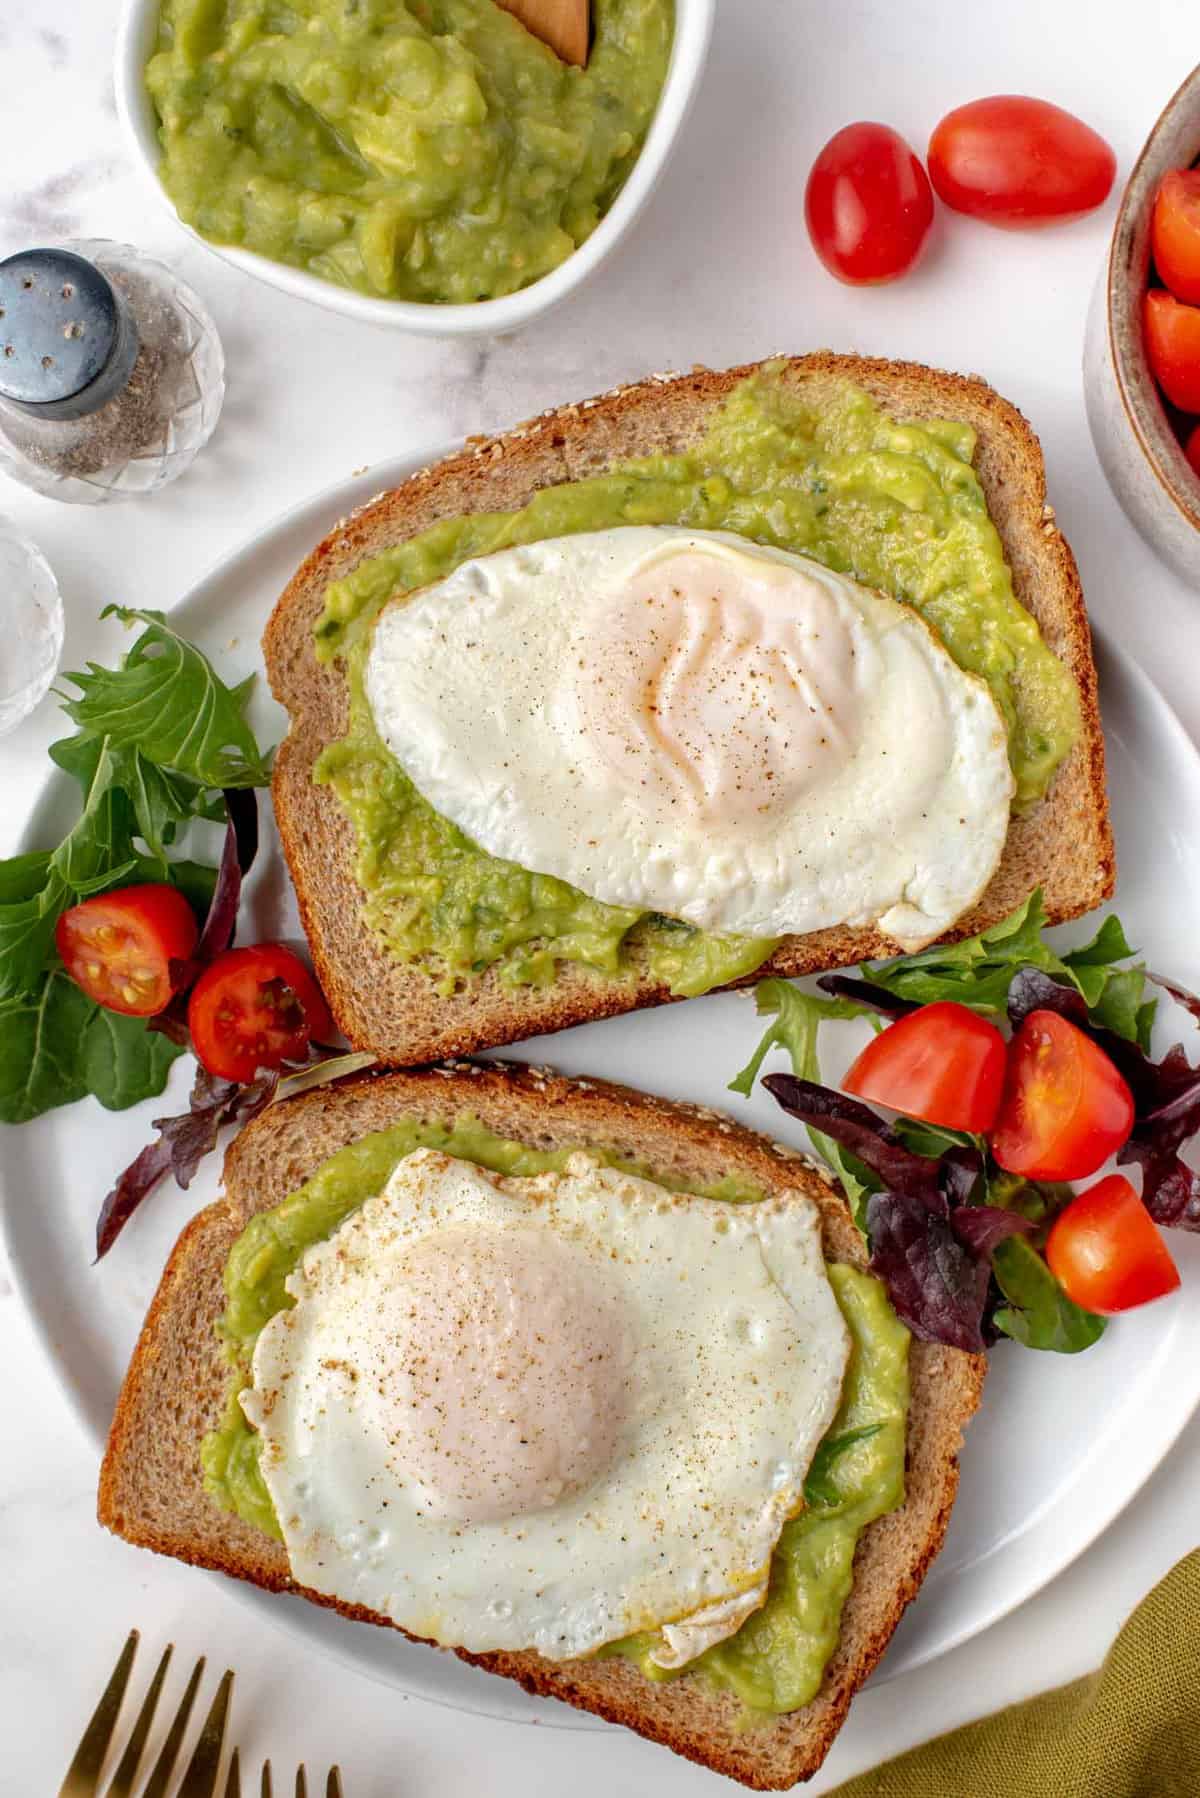 Two basted eggs on avocado toast.